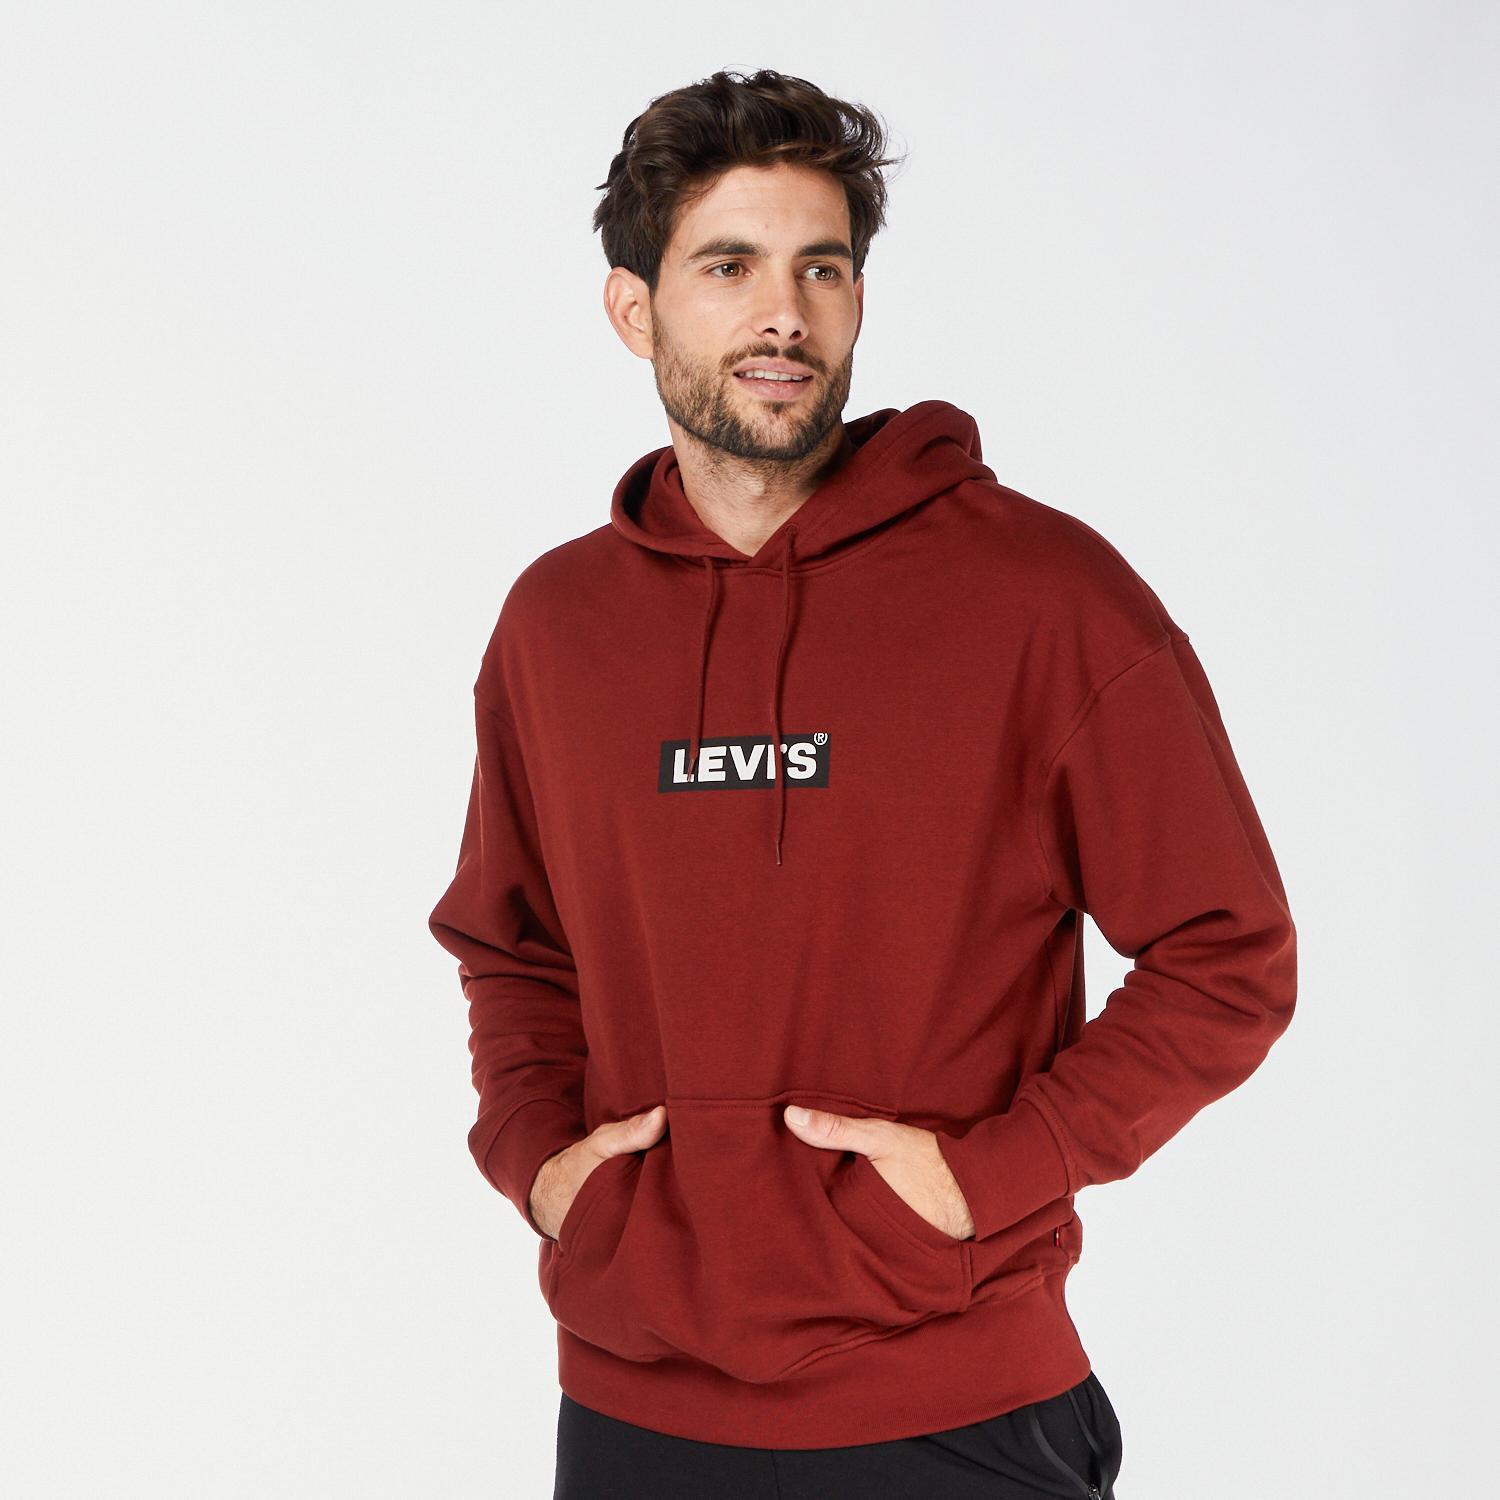 Levi's Original - Vermelho - Sweatshirt Homem tamanho L product